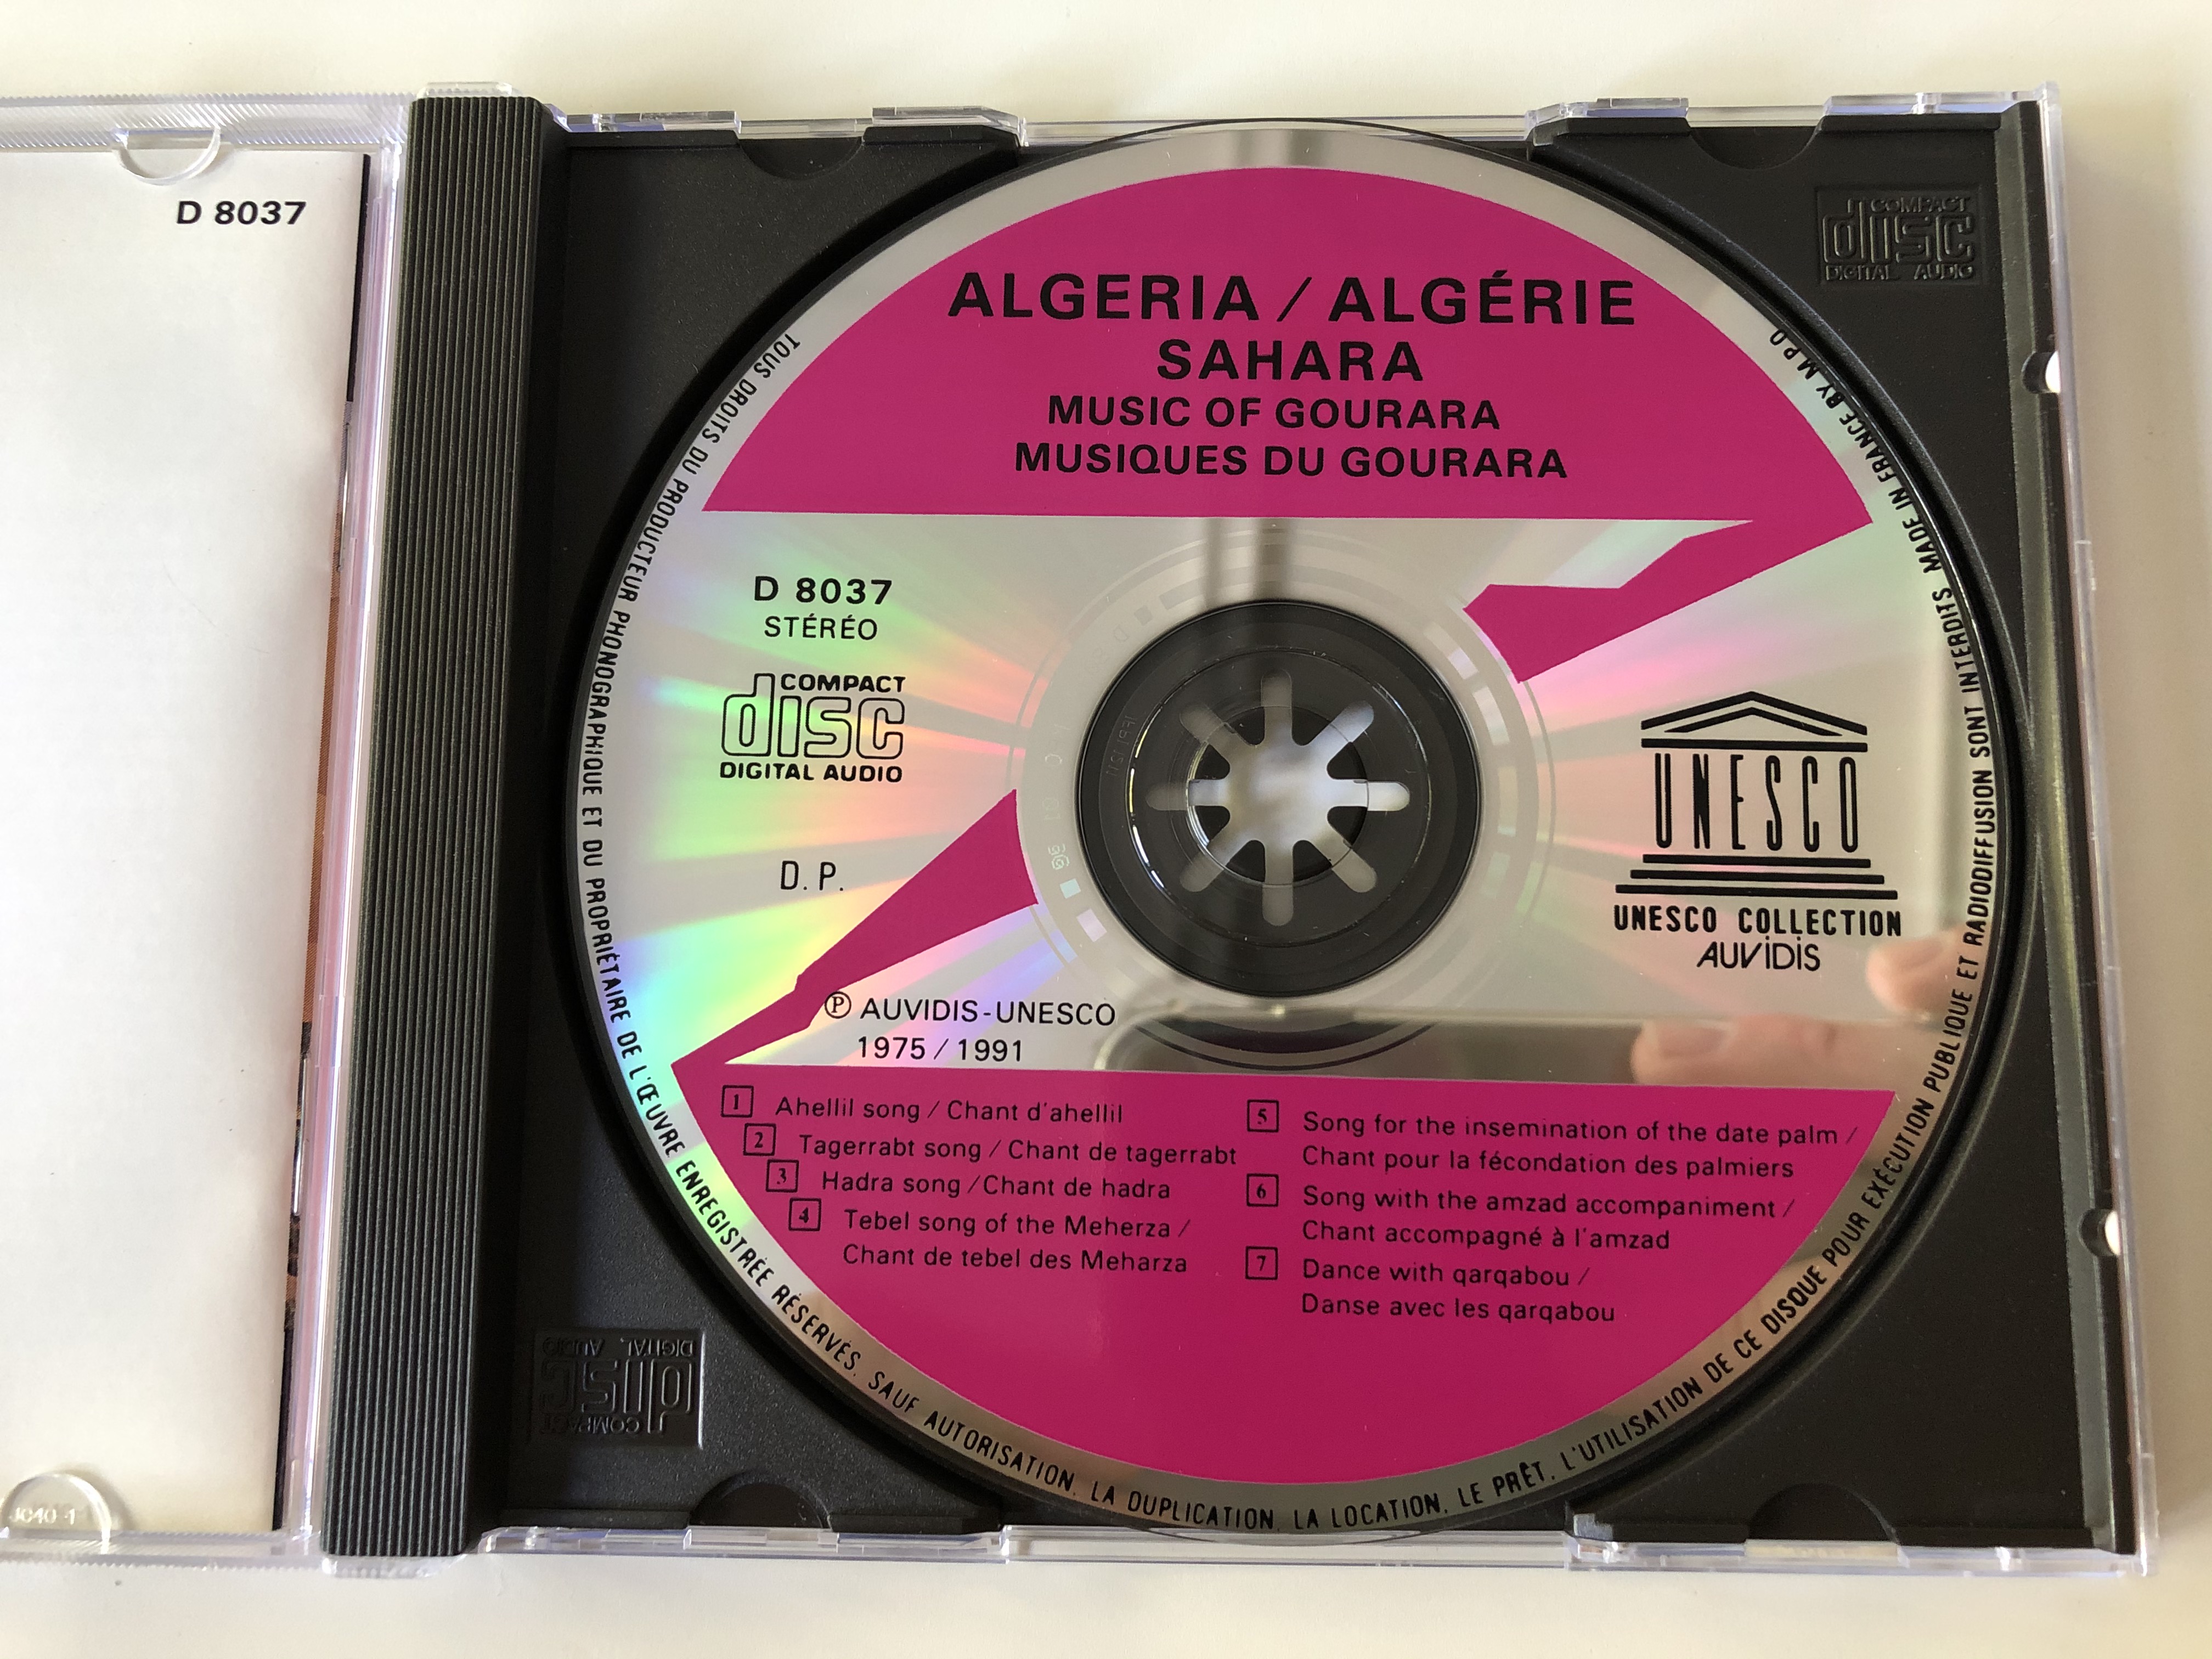 algeria-sahara-music-of-gourara-musics-musicians-of-the-world-auvidis-audio-cd-1991-stereo-d-8037-6-.jpg